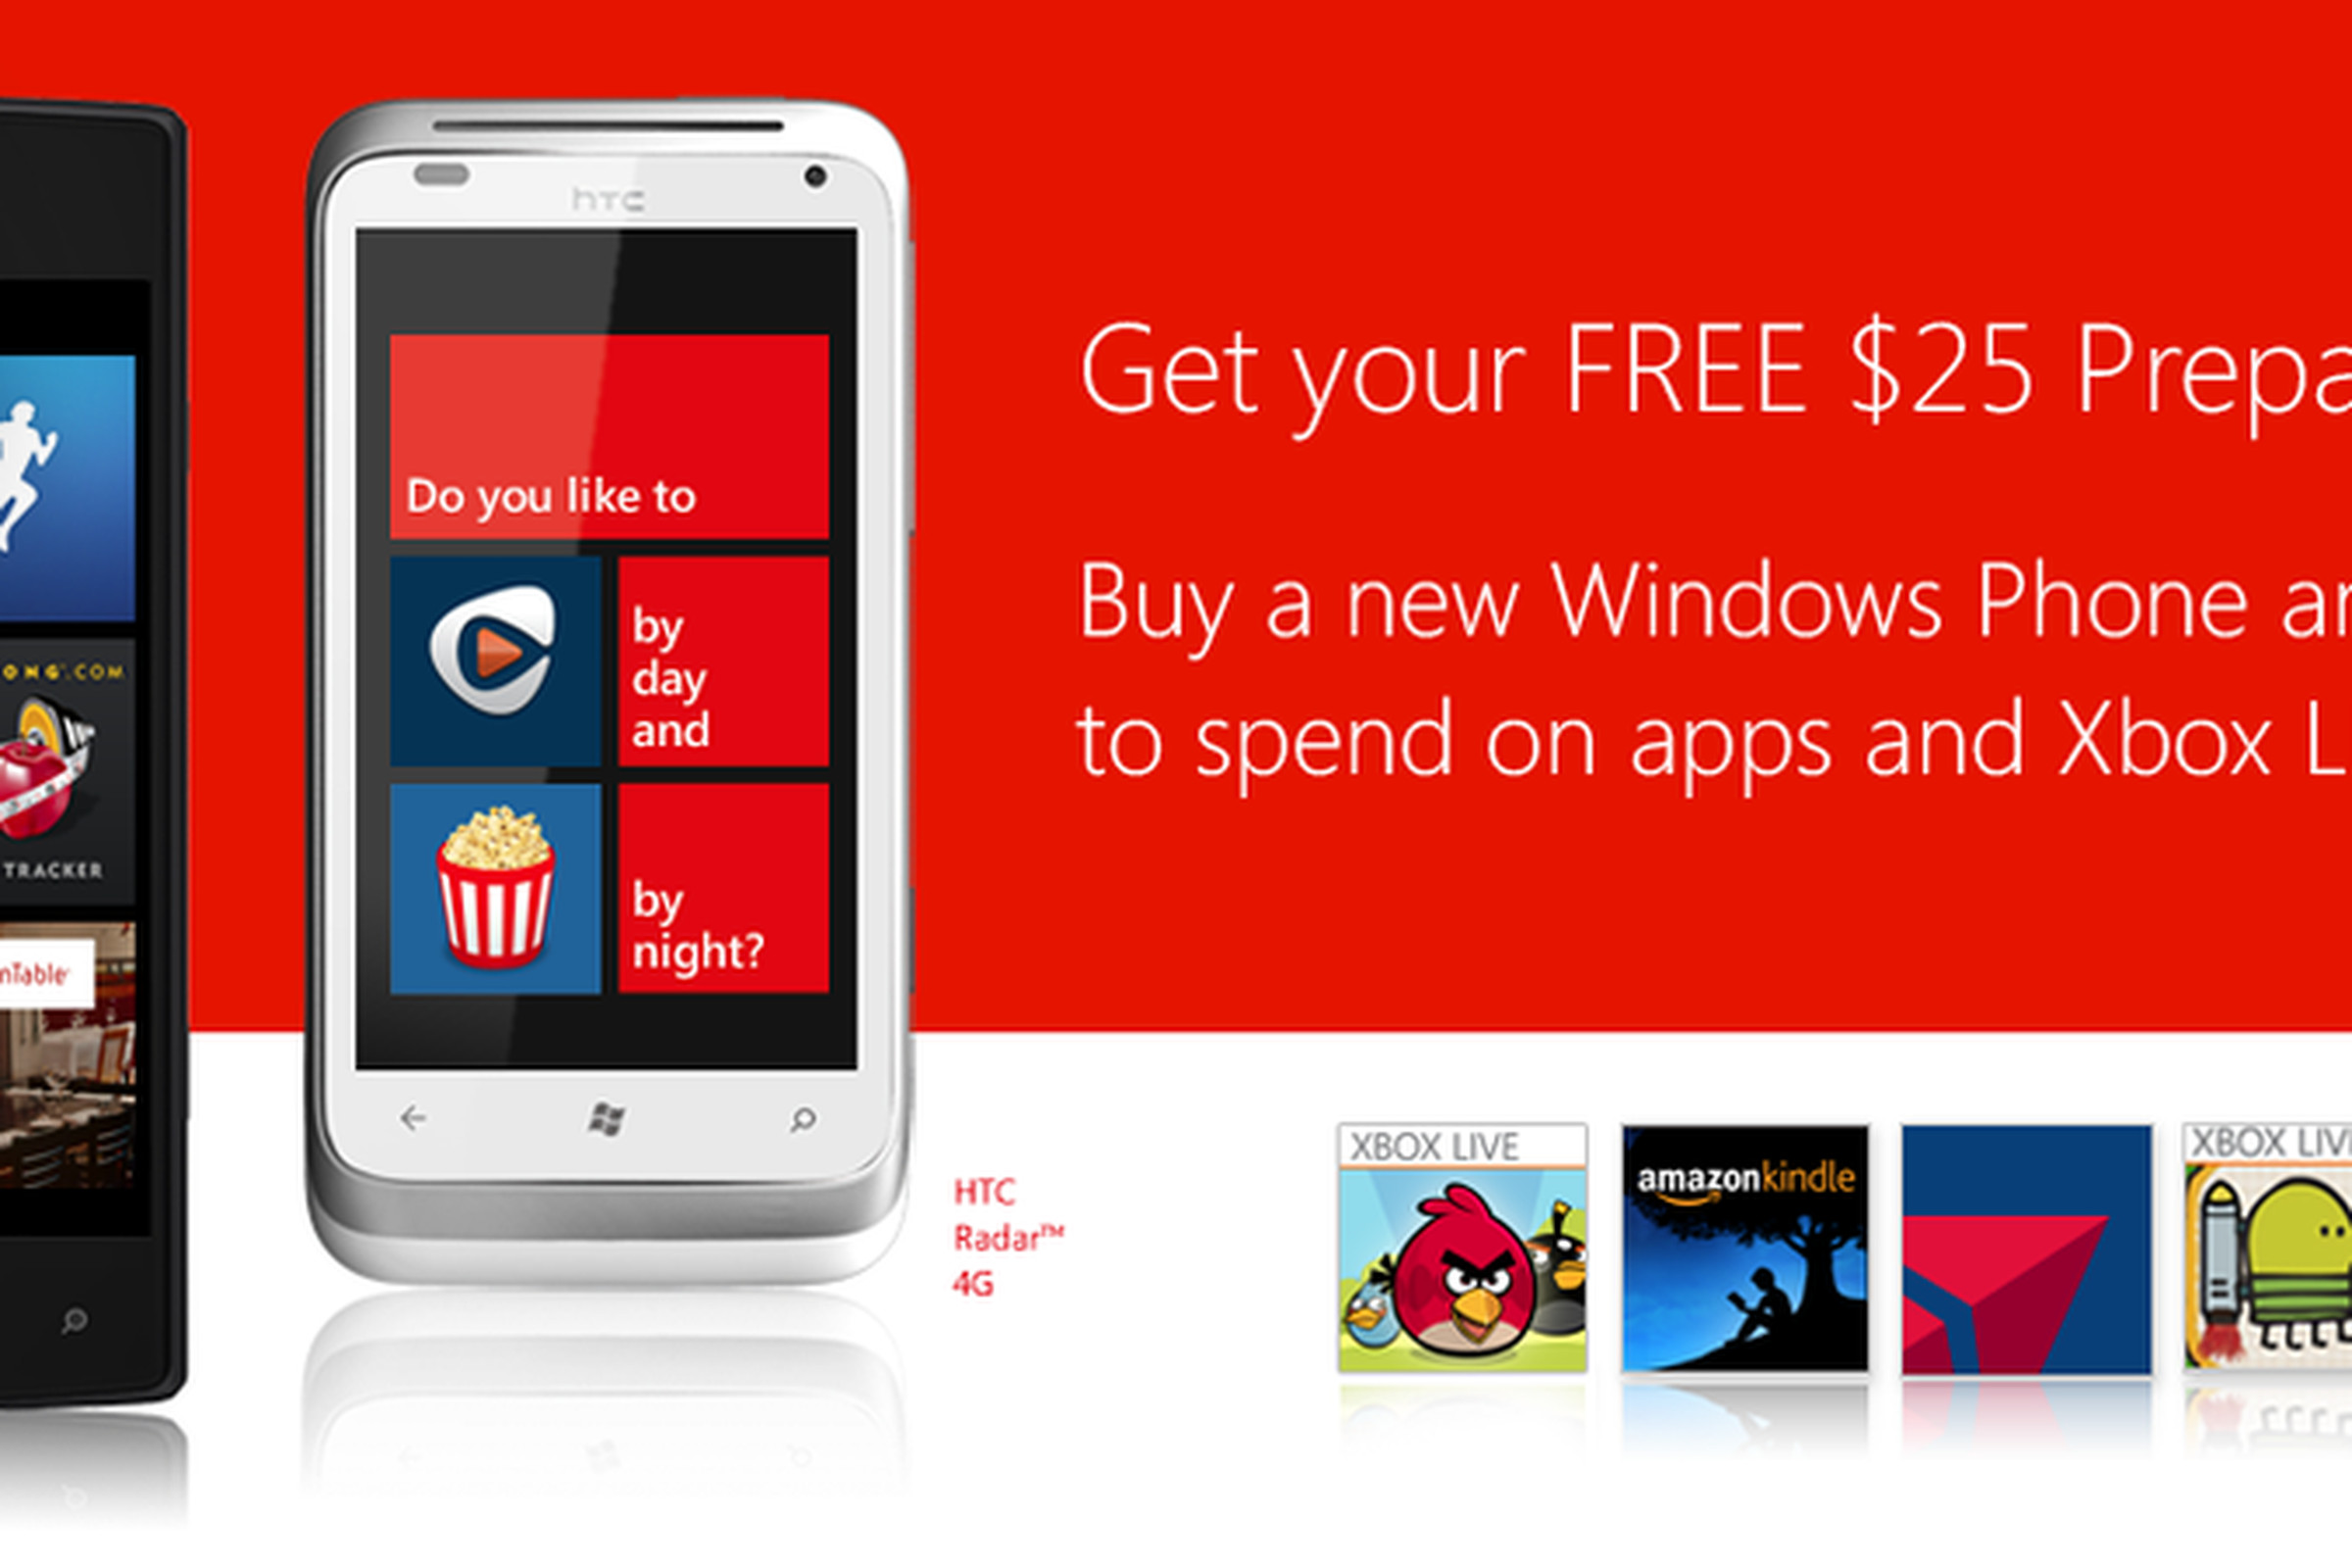 Windows Phone Good Deal